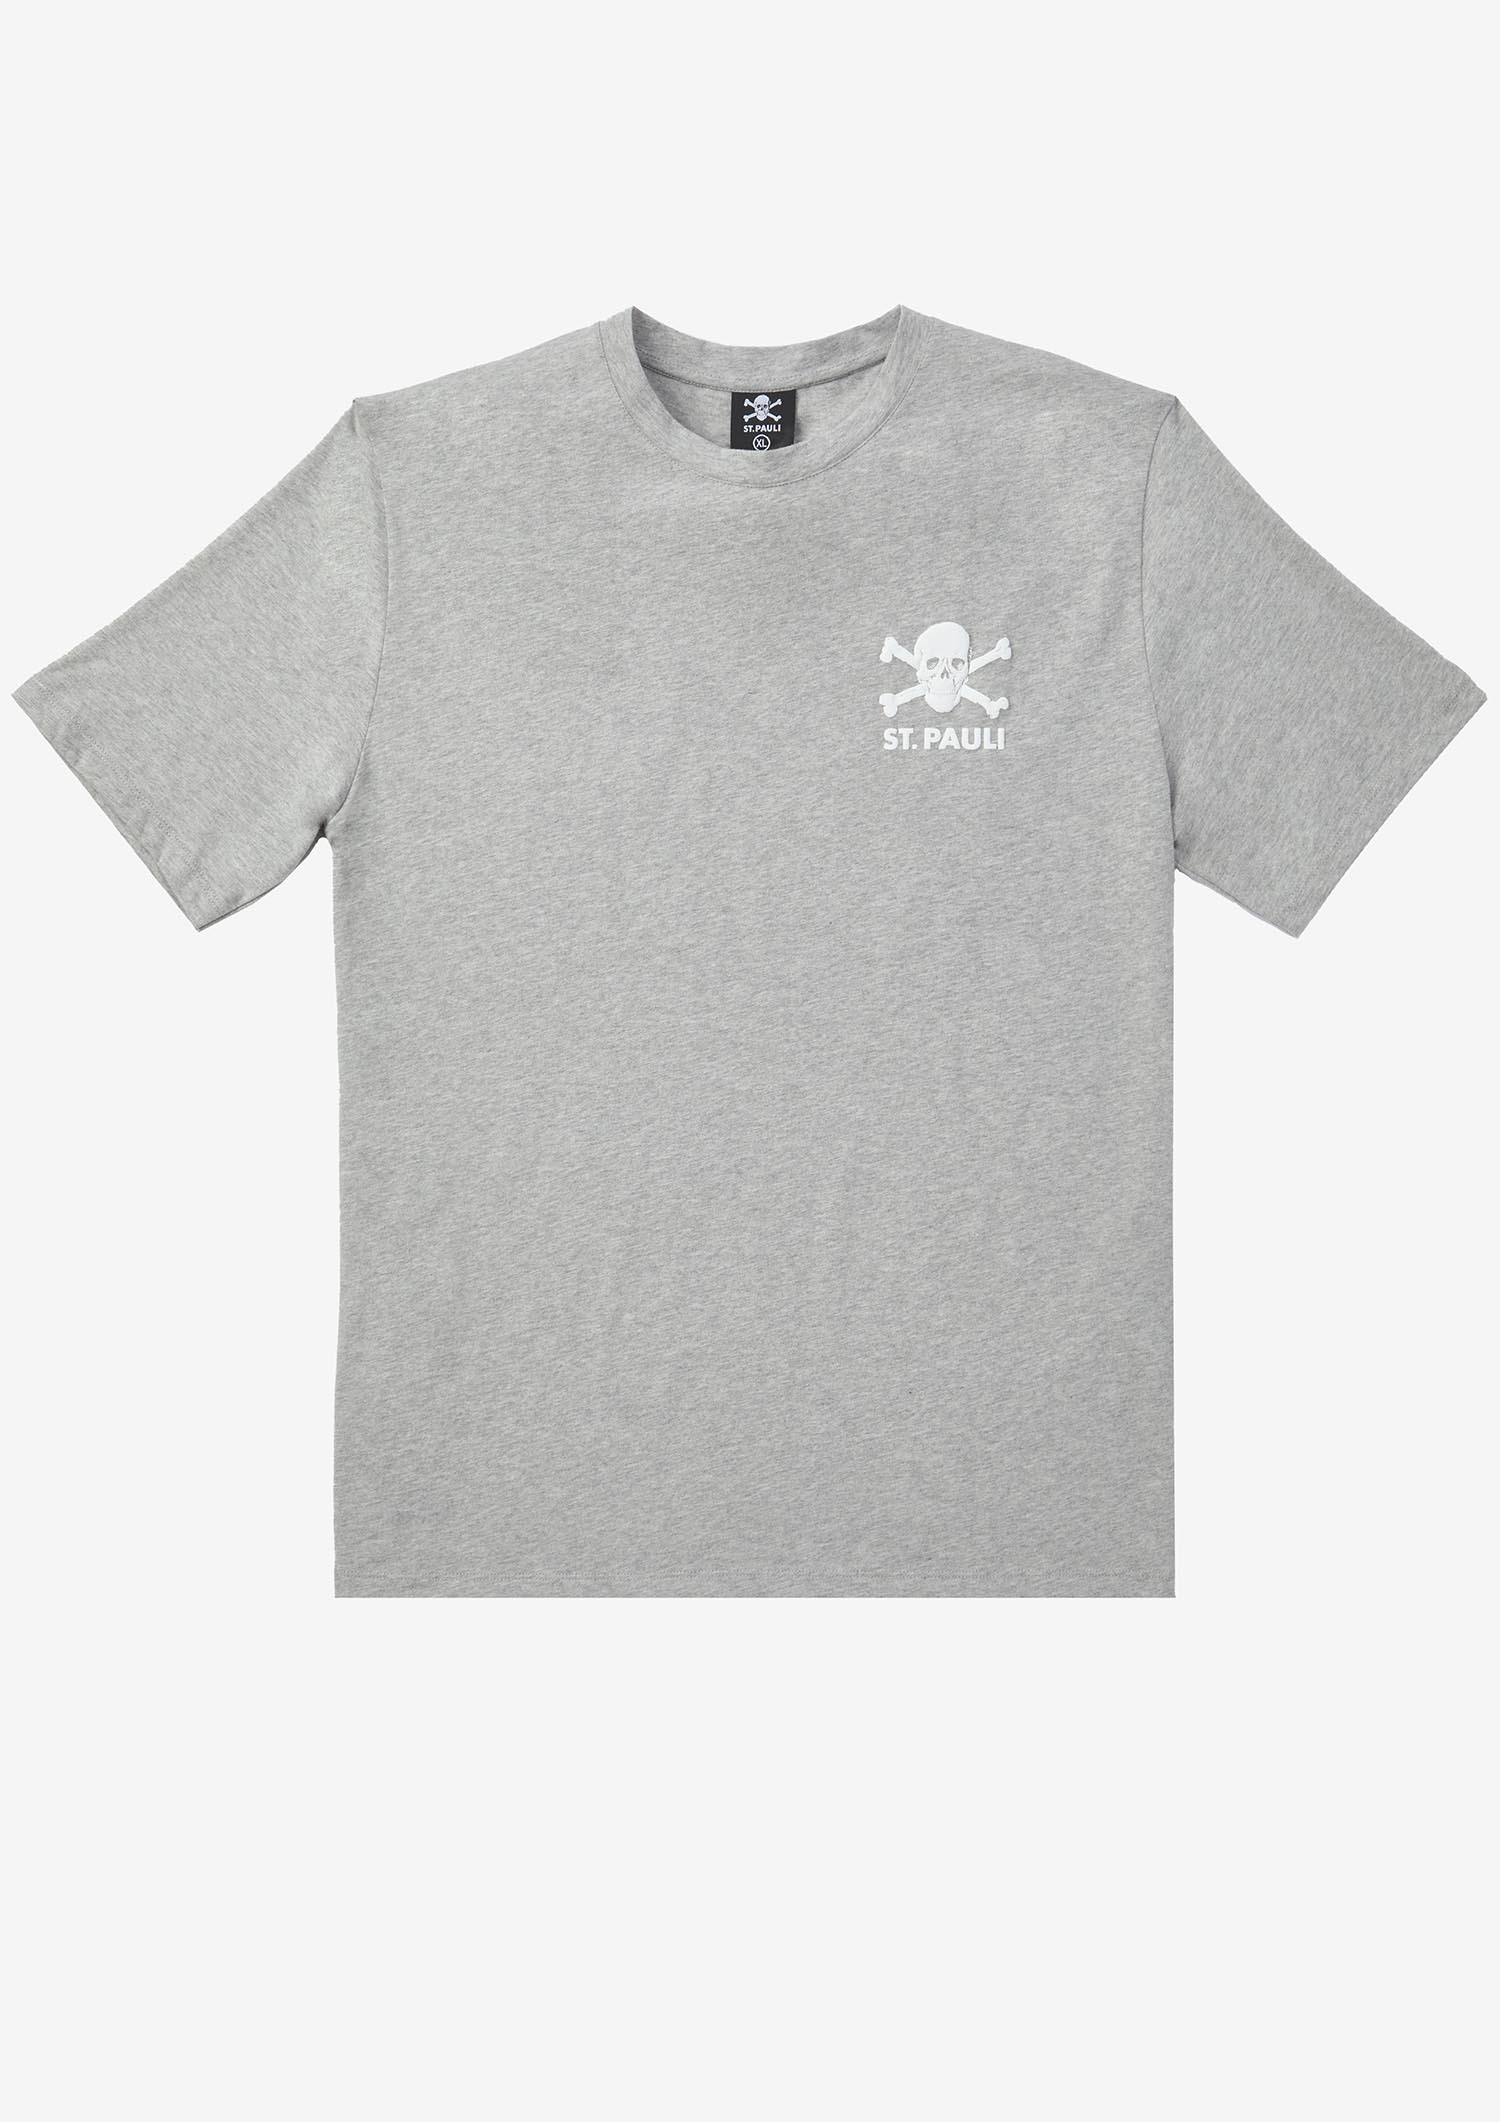 T-Shirt Skull and Crossbones - grey-white